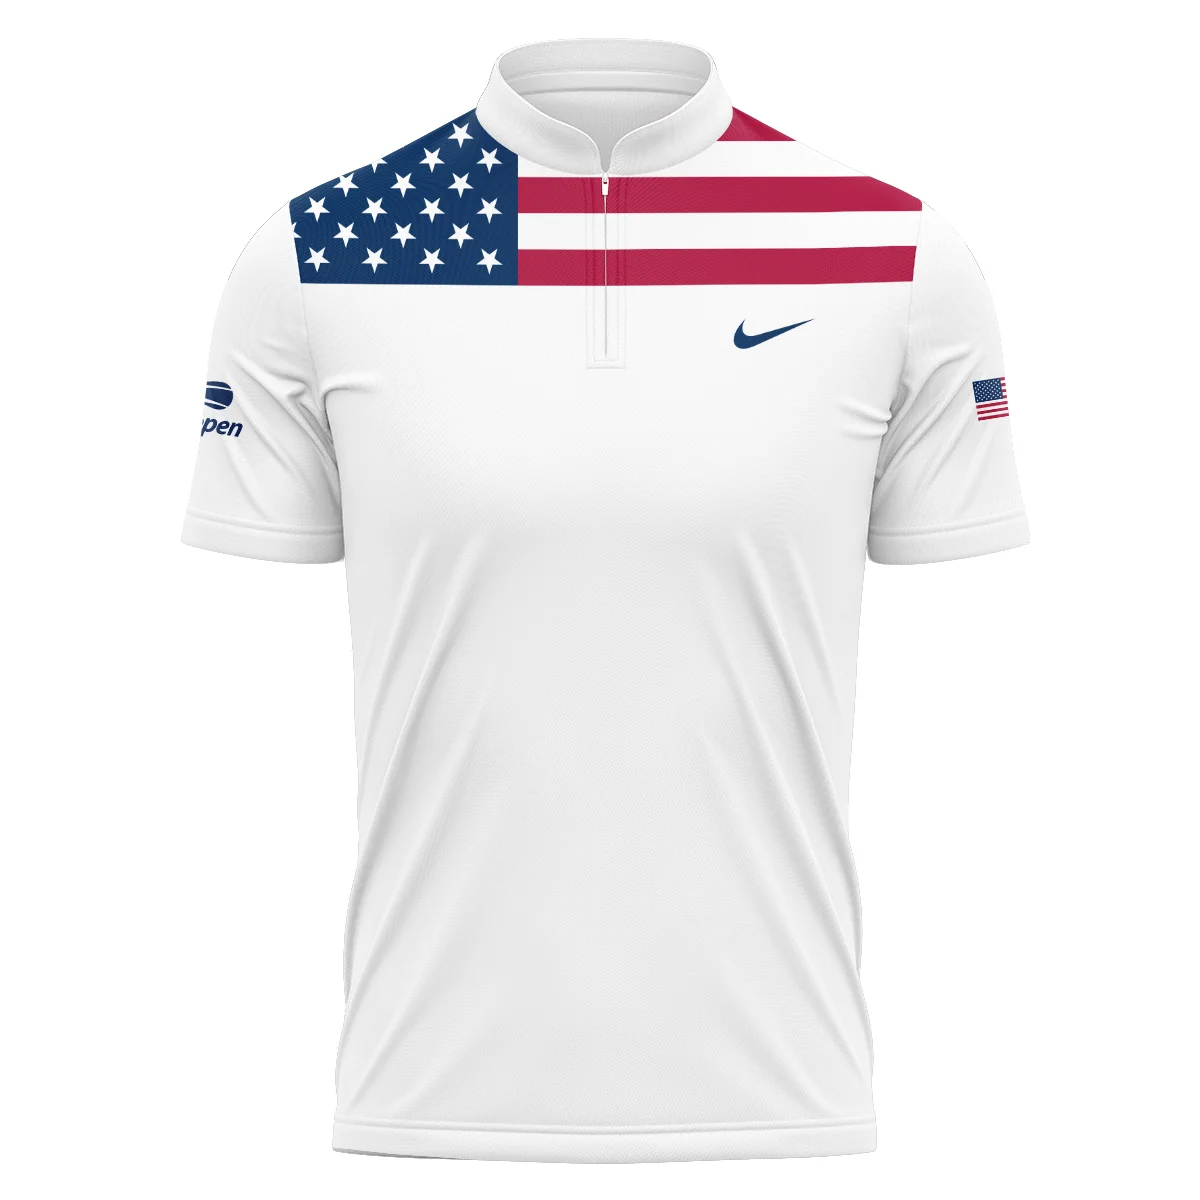 US Open Tennis Champions Nike USA Flag White Unisex T-Shirt Style Classic T-Shirt